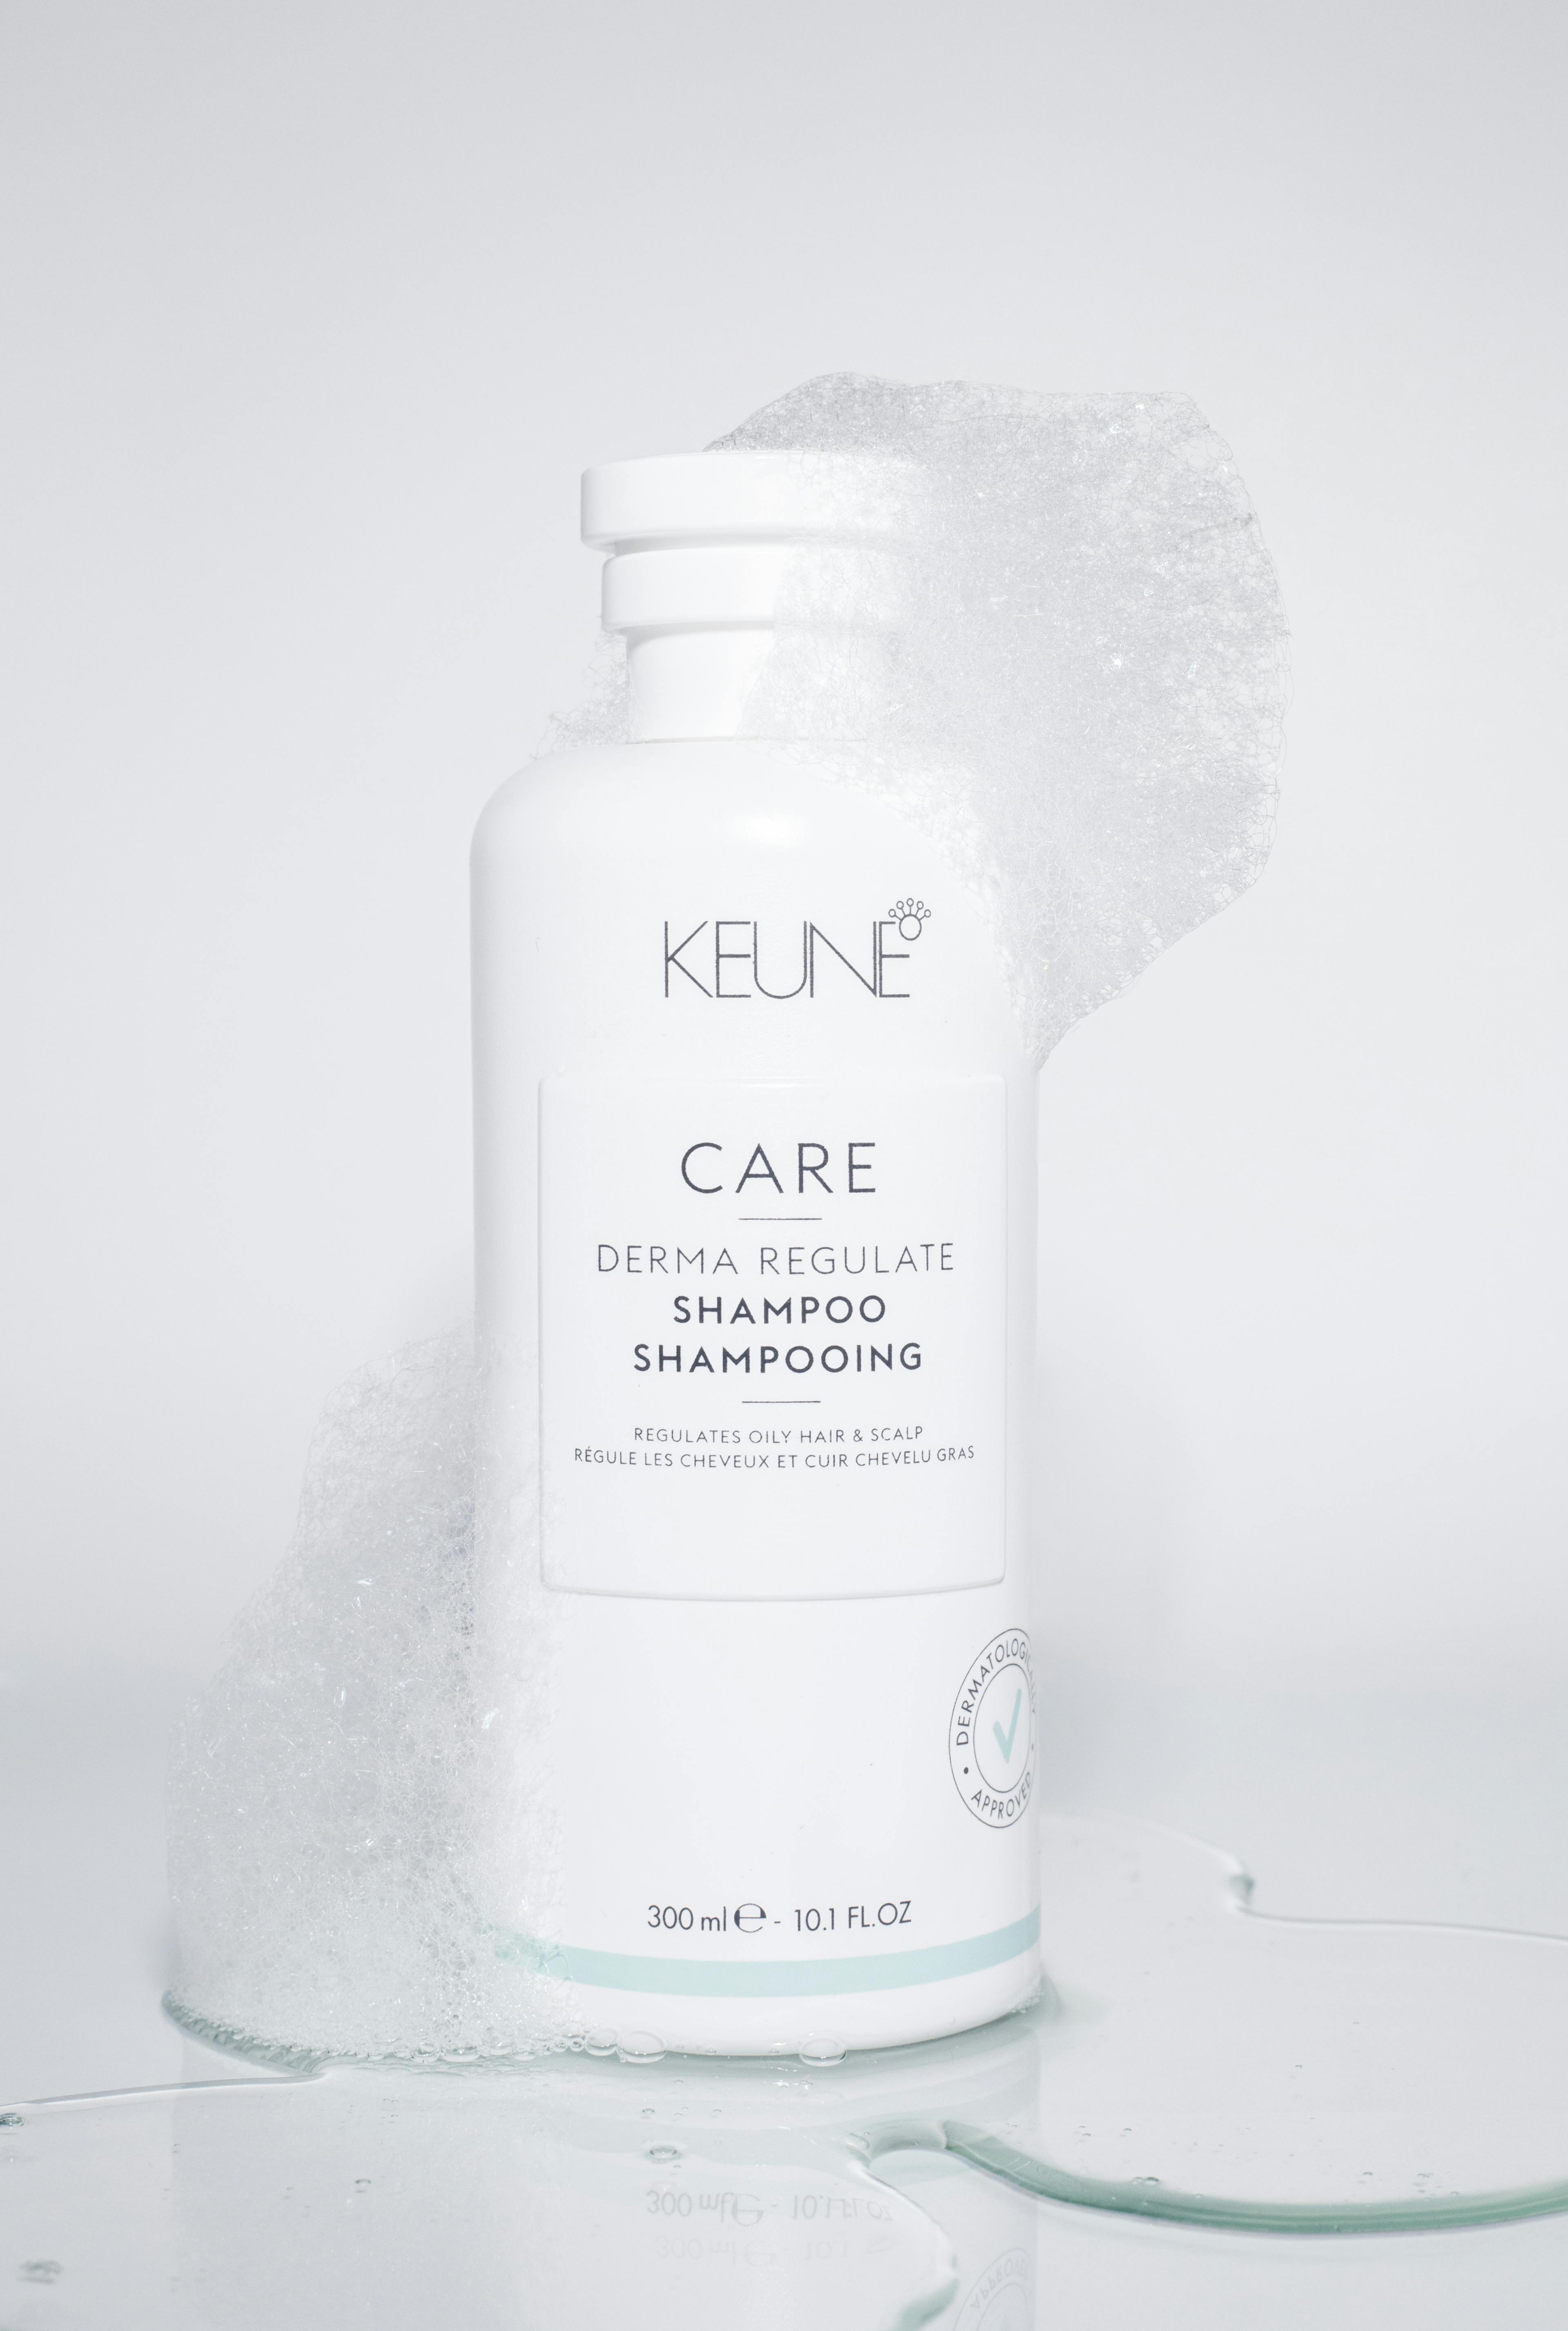 Keune Care Derma Regulate product texture